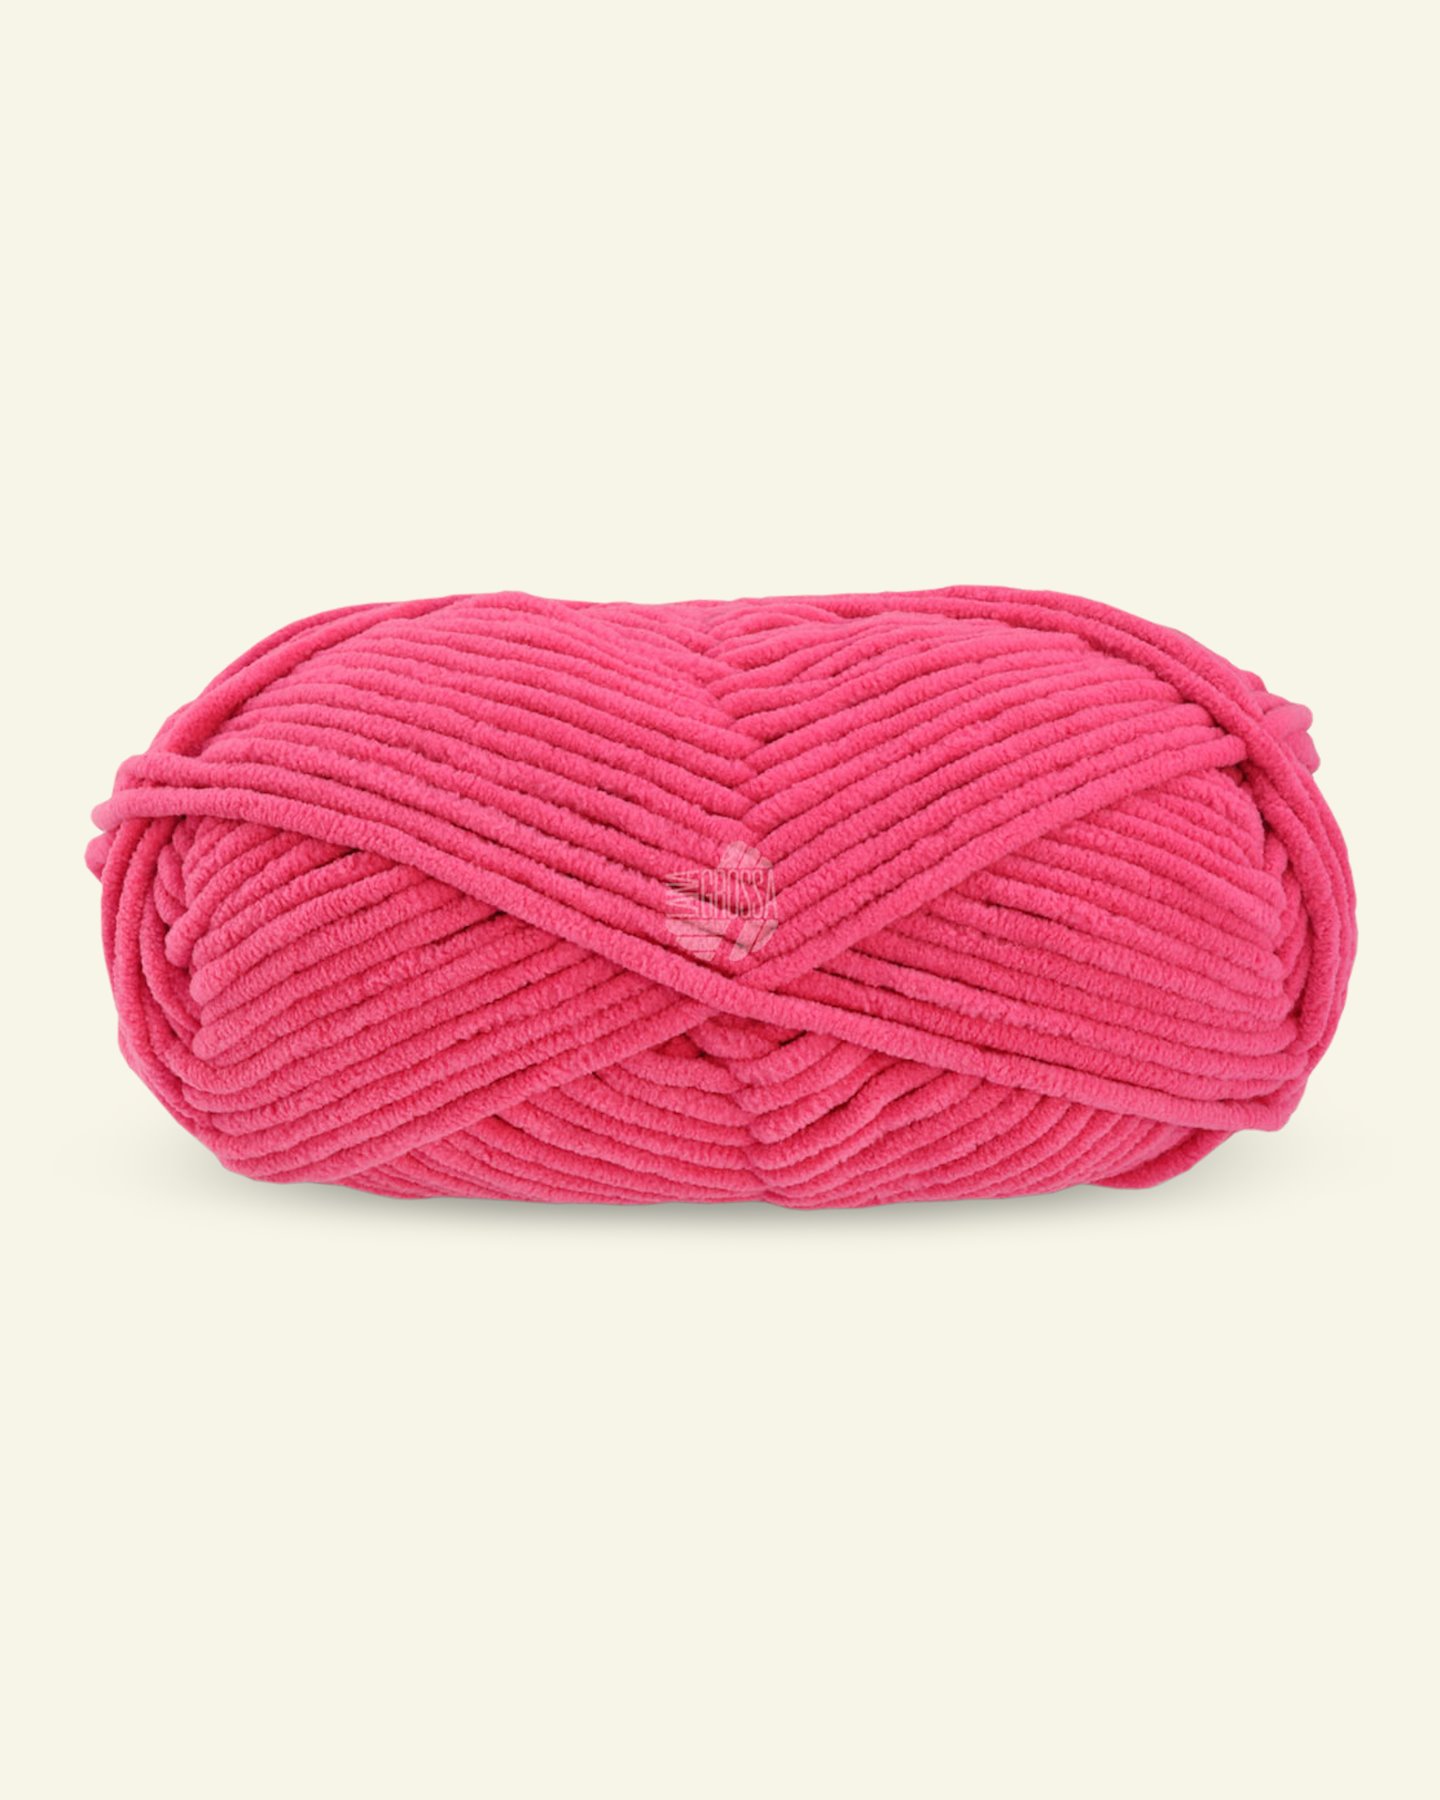 Lana Grossa, polyester yarn / velour yarn "The Look", pink 90001138_pack